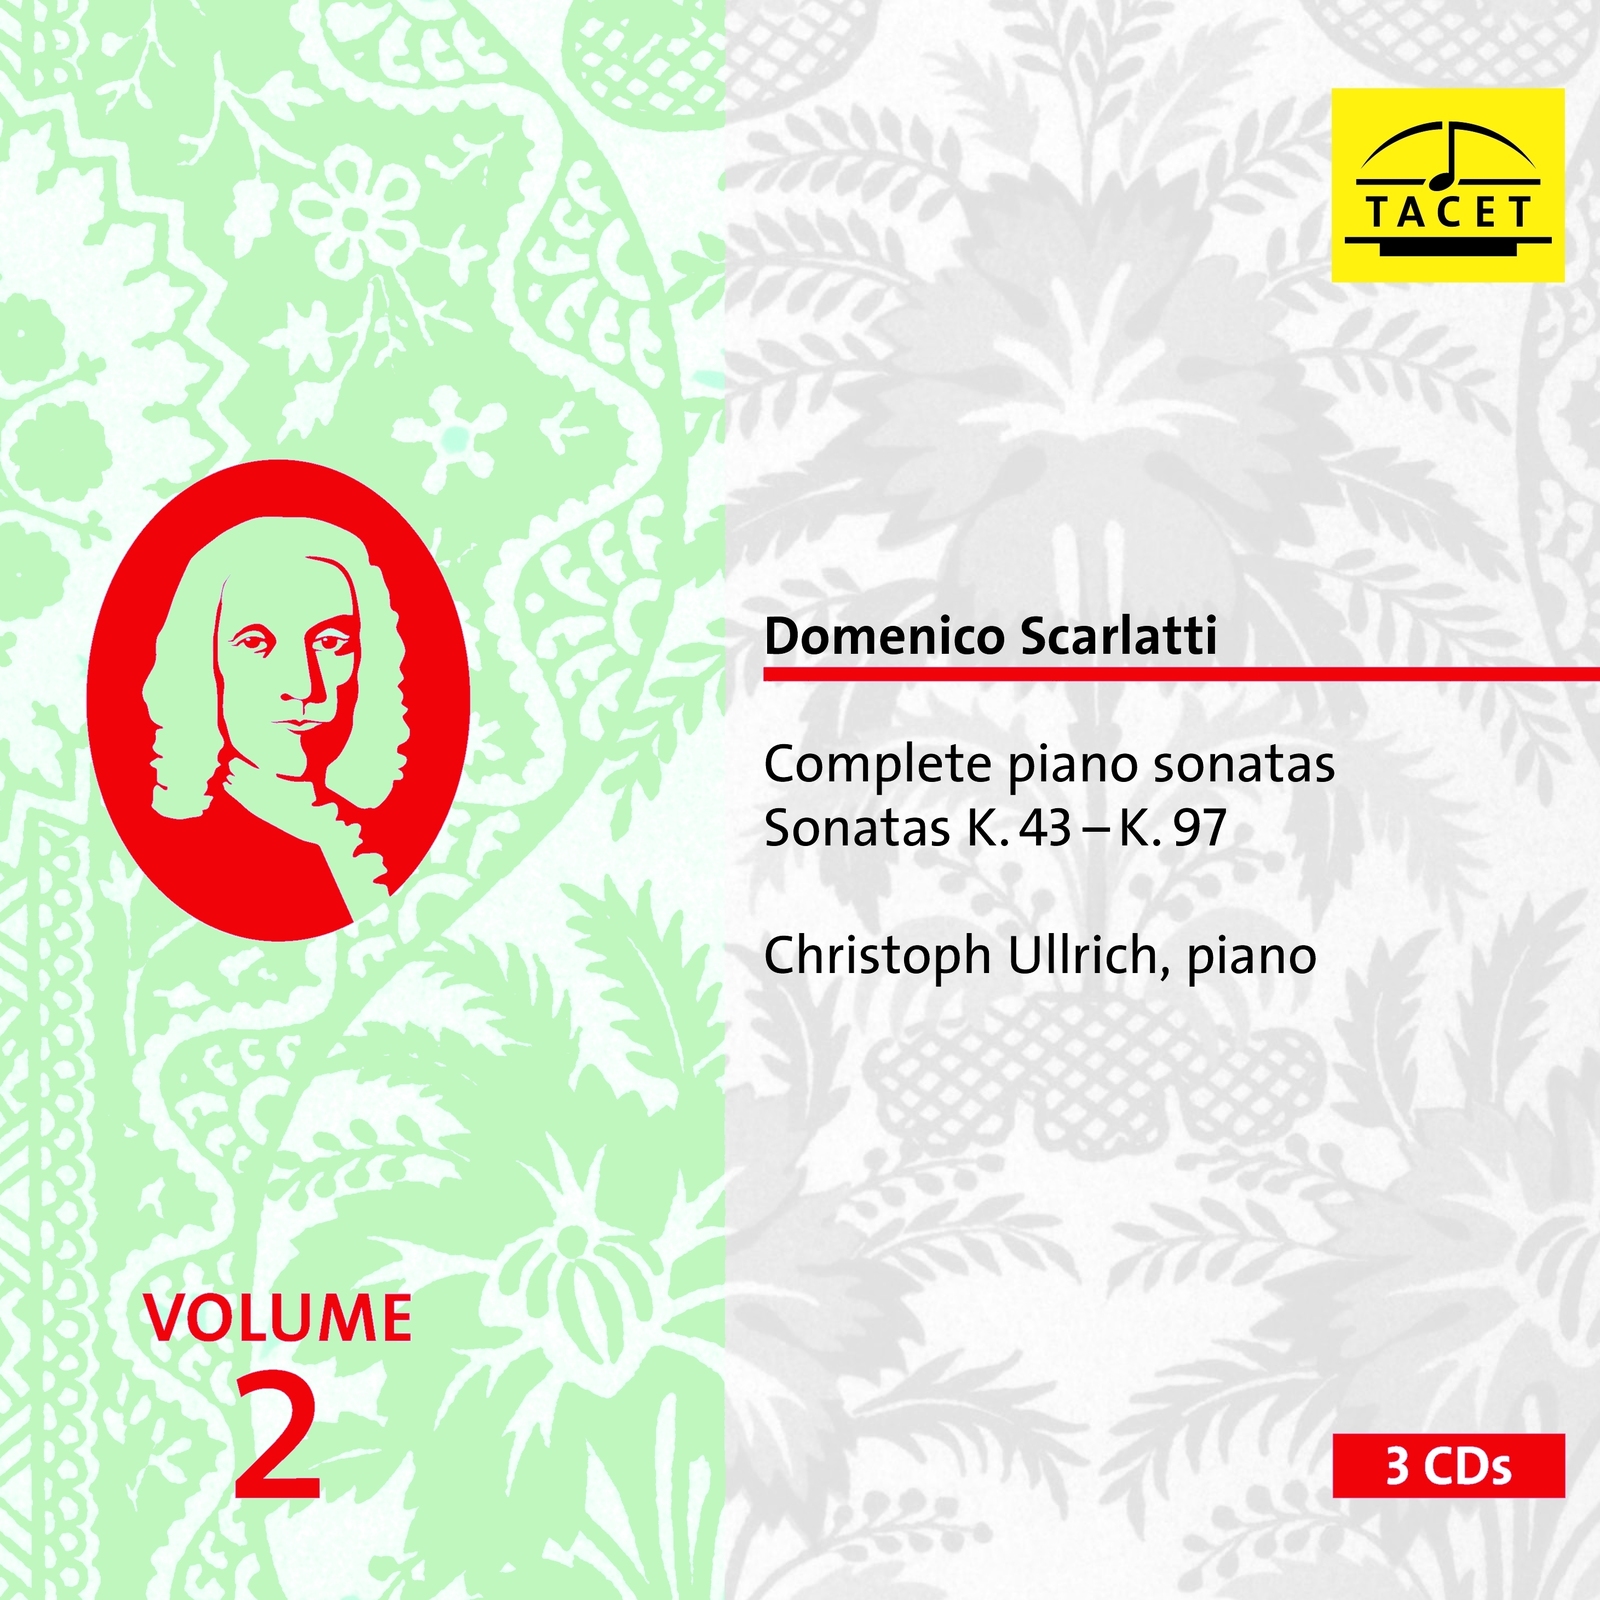 Domenico Scarlatti, Scarlatti, Klaviersonaten, CD, Hoffmeister